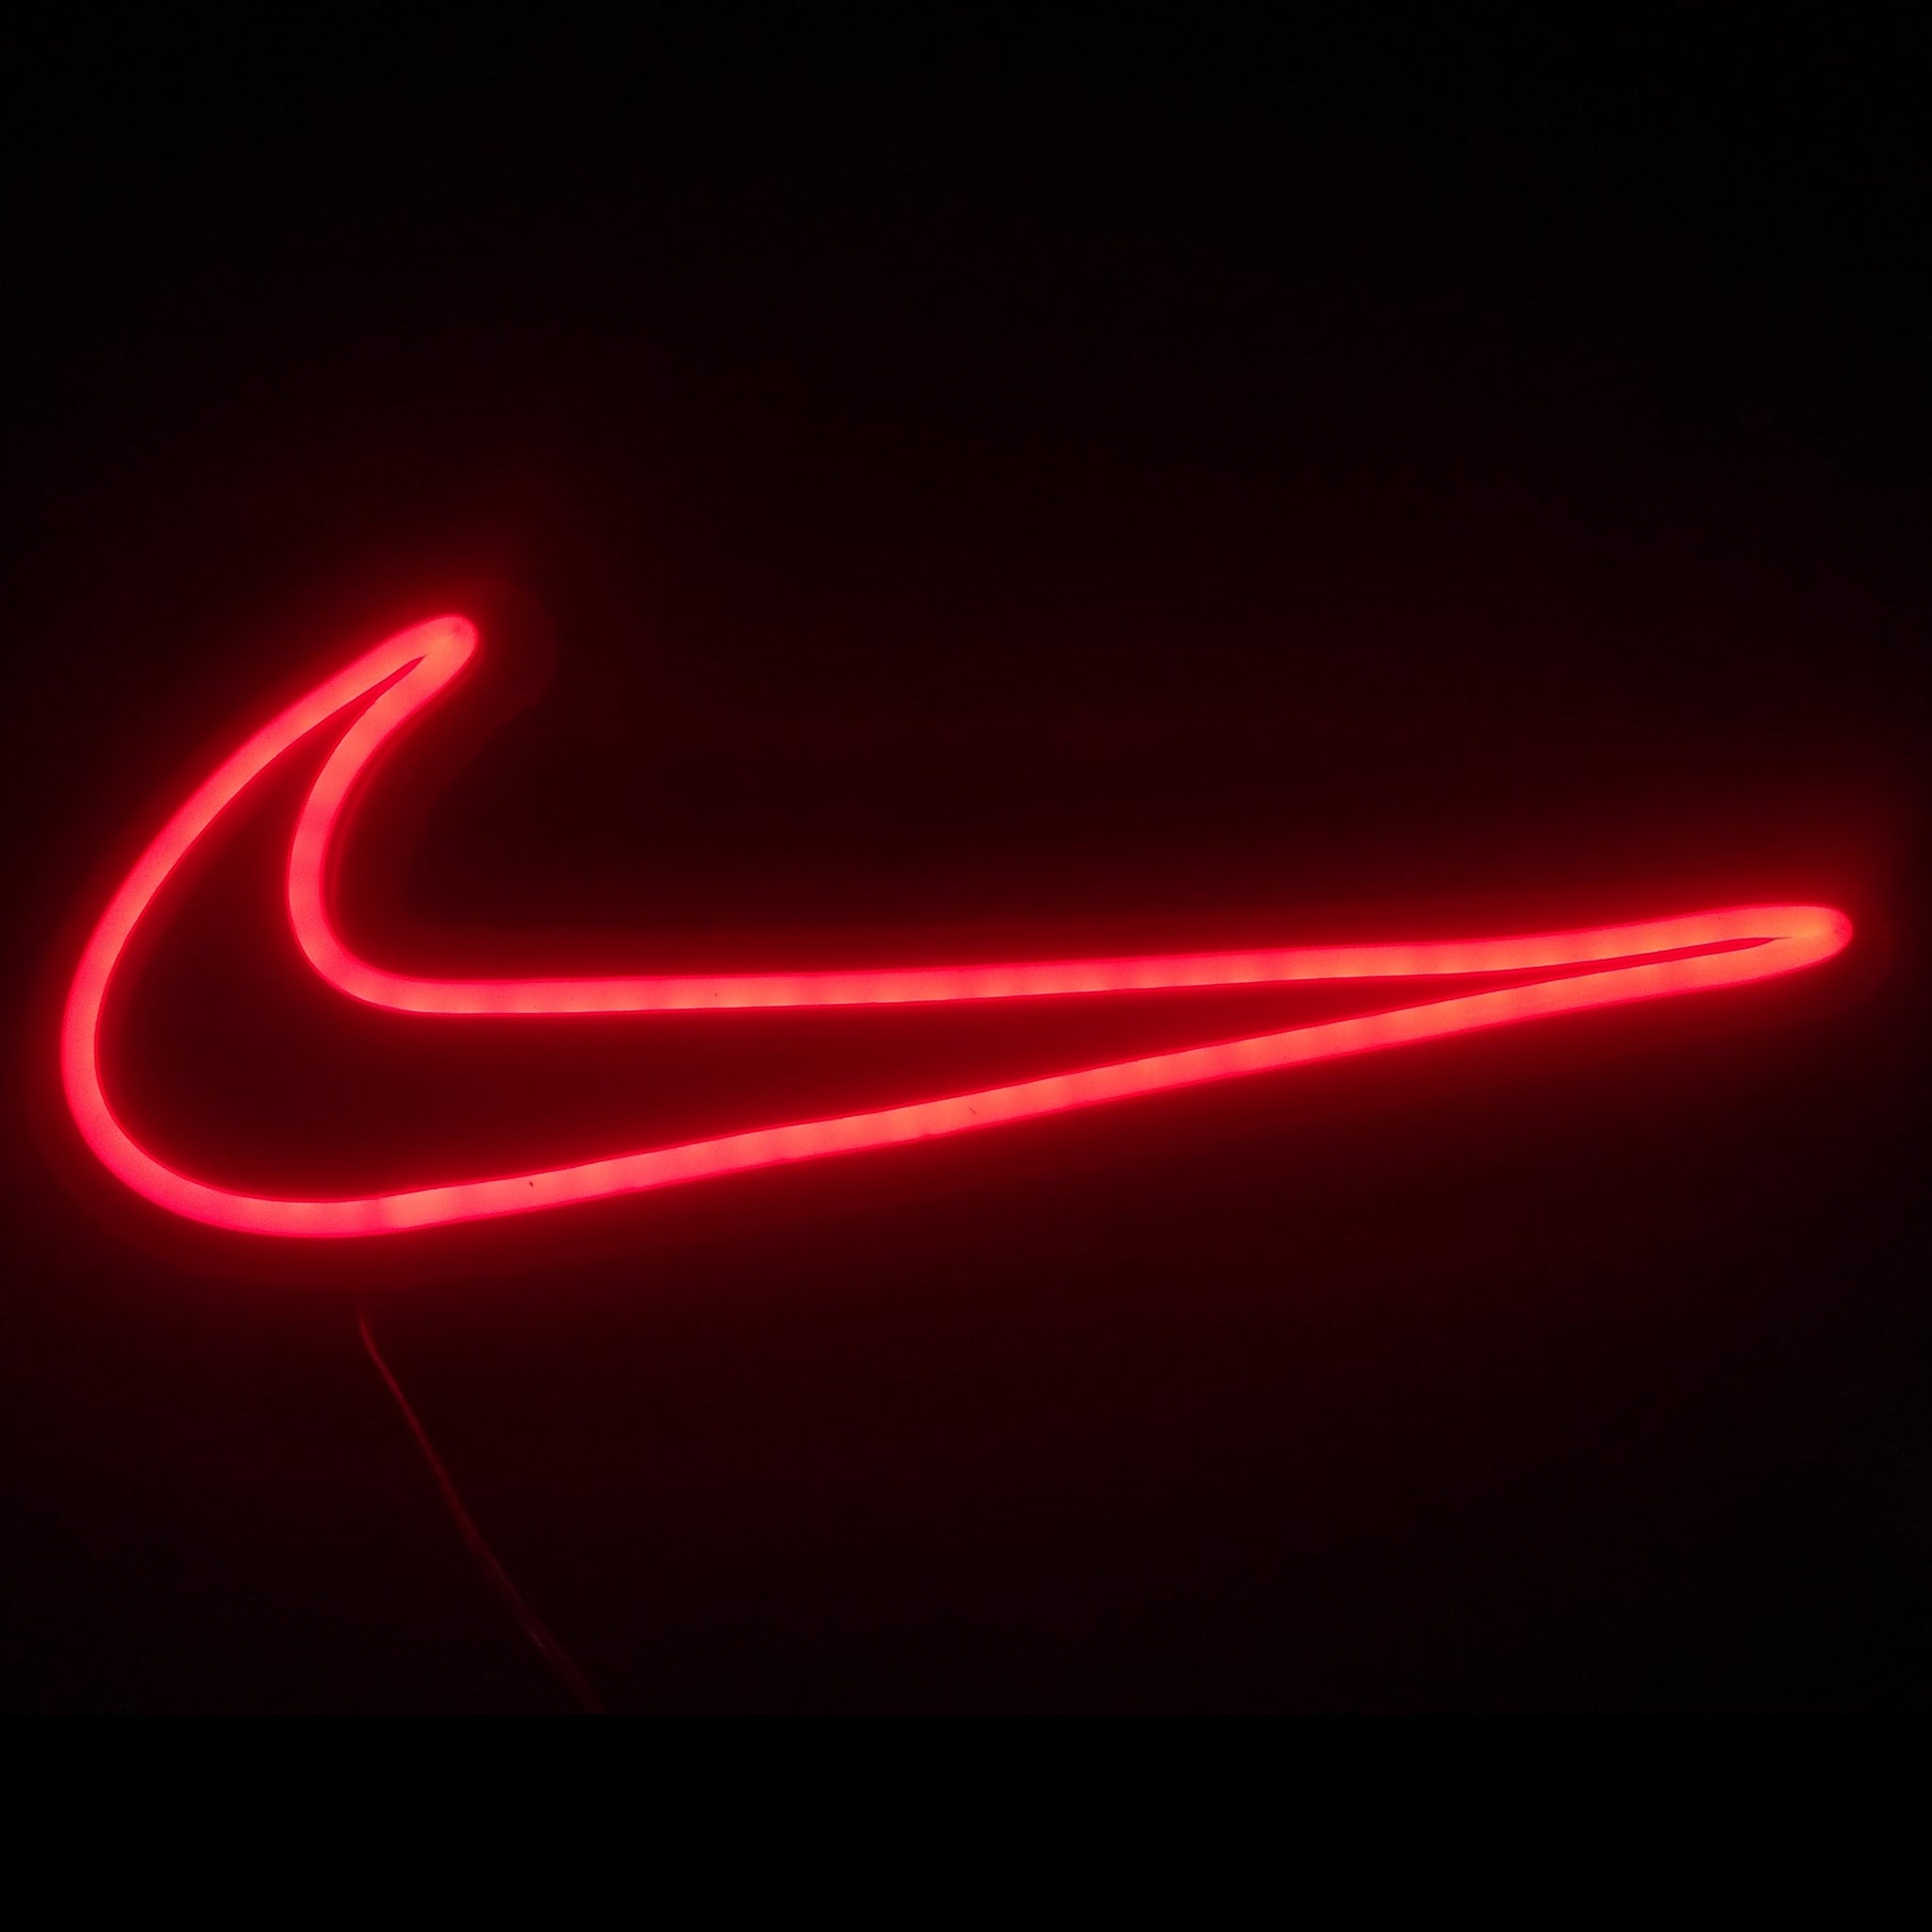 Nike sign, nike logo neon light sign, neon sign